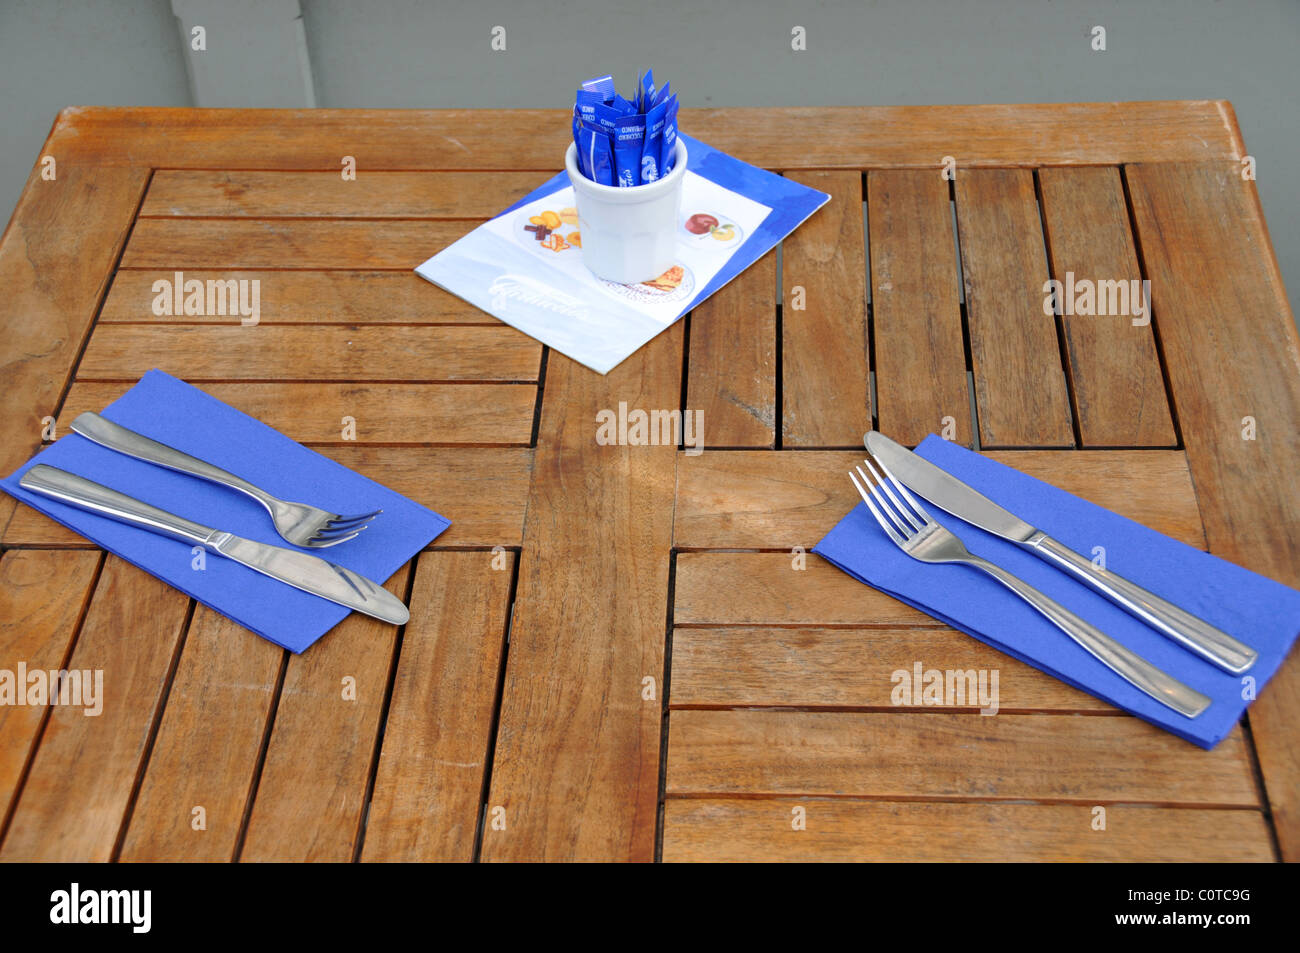 Carluccio's restaurant Islington London table knives forks napkins Stock Photo